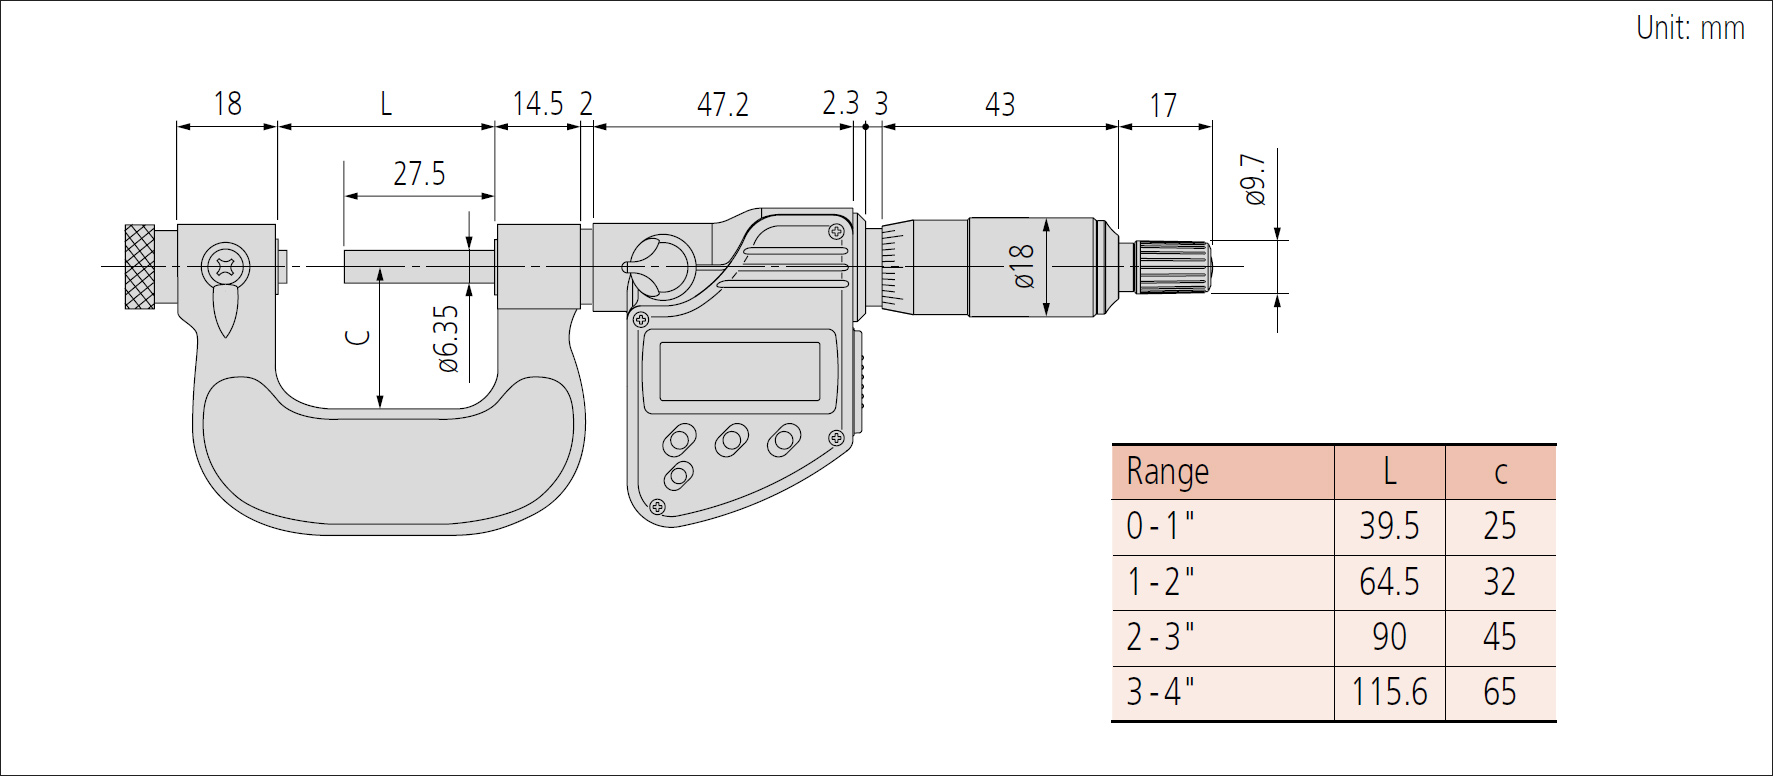 Mitutoyo 326 interchangeable anvil screw thread micrometer dimensions.